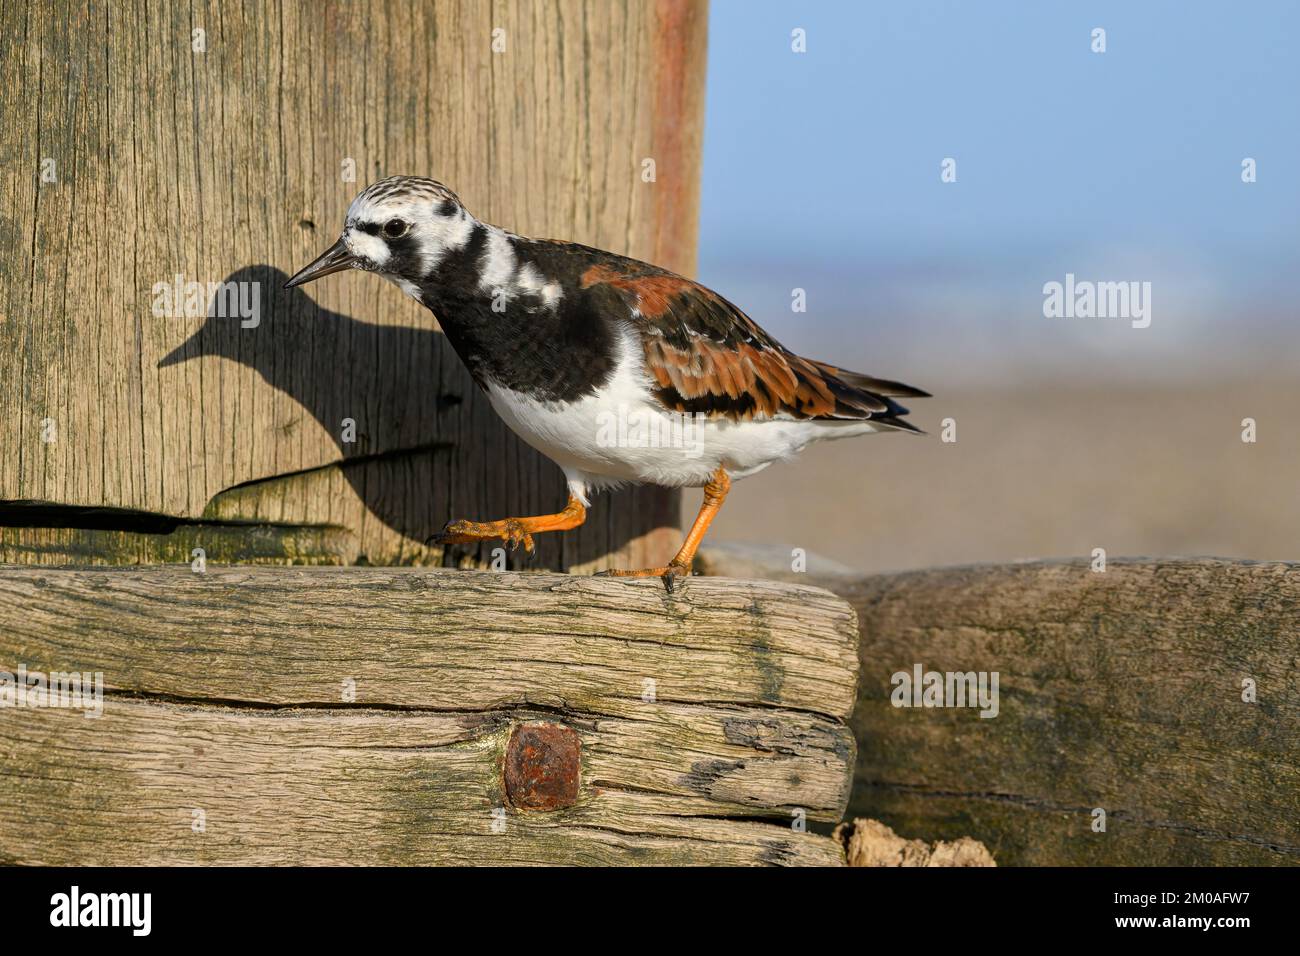 Turnstone, Ruddy Turnstone, Arenaria interpres  Adult breeding plumage bird walking on a wooden groyne  Norfolk  April Stock Photo